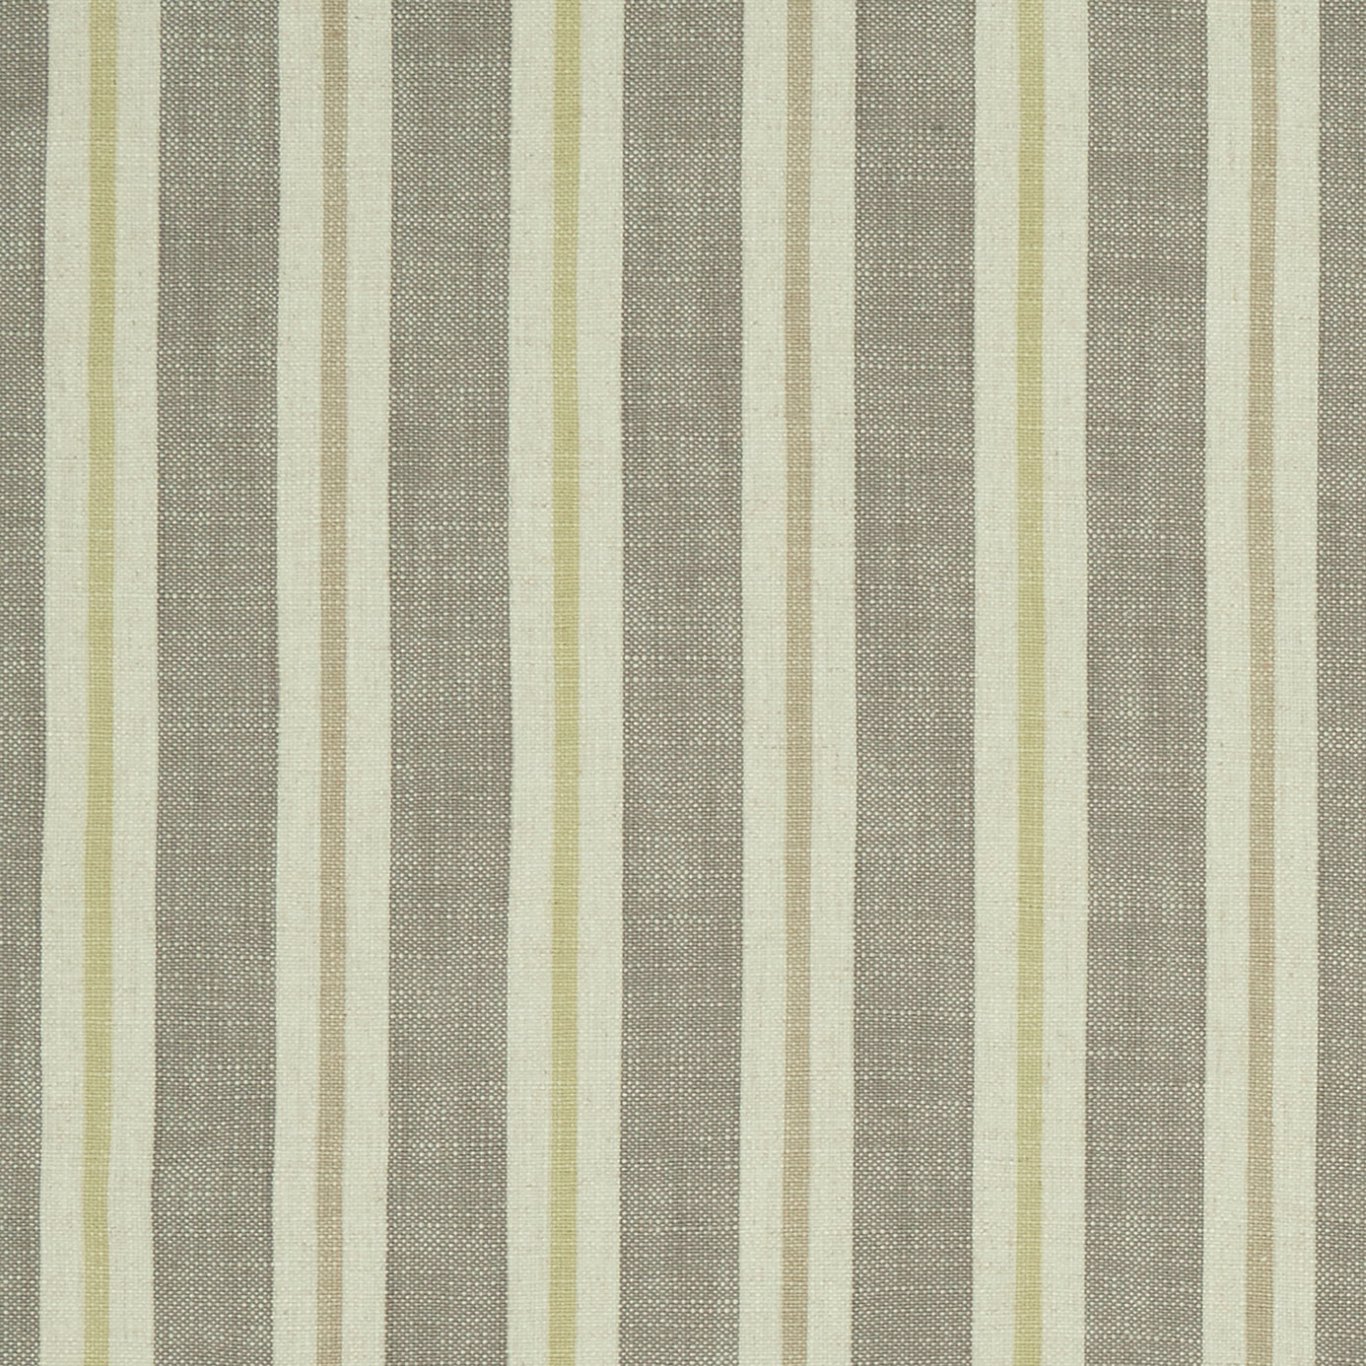 Sackville Stripe Citron/Natural Fabric by CNC